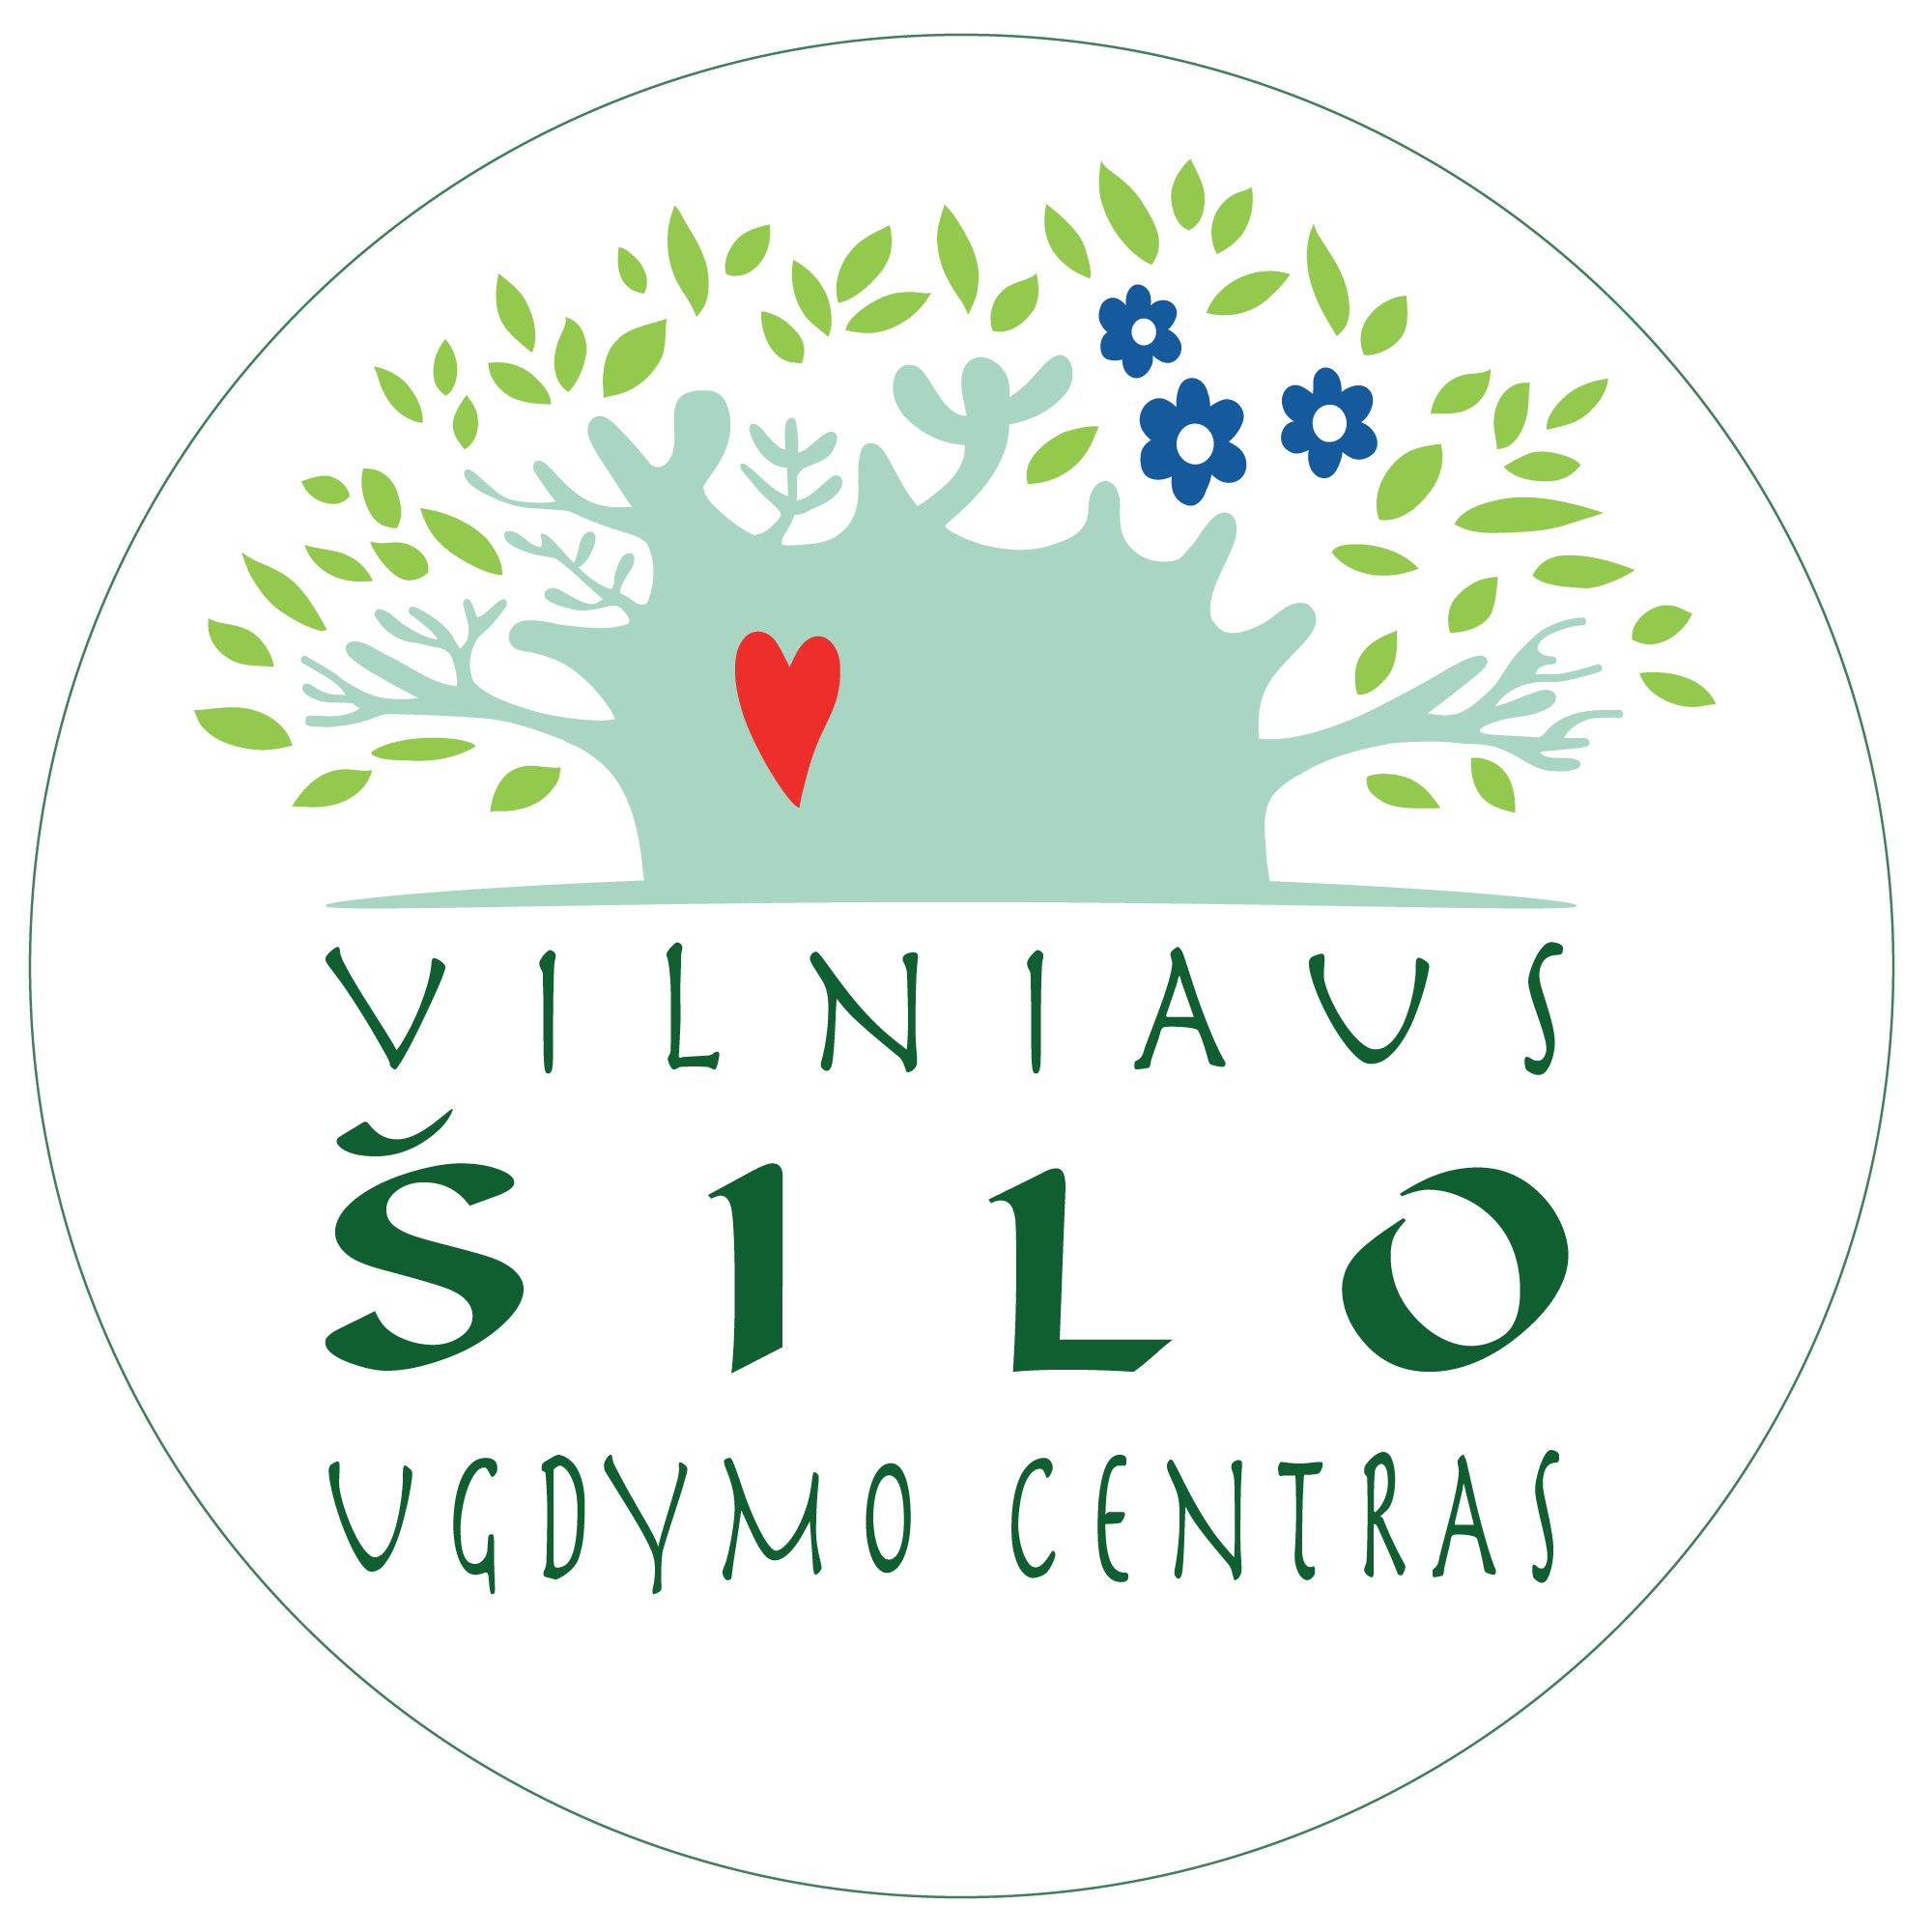 Vilniaus Šilo udgymo centras